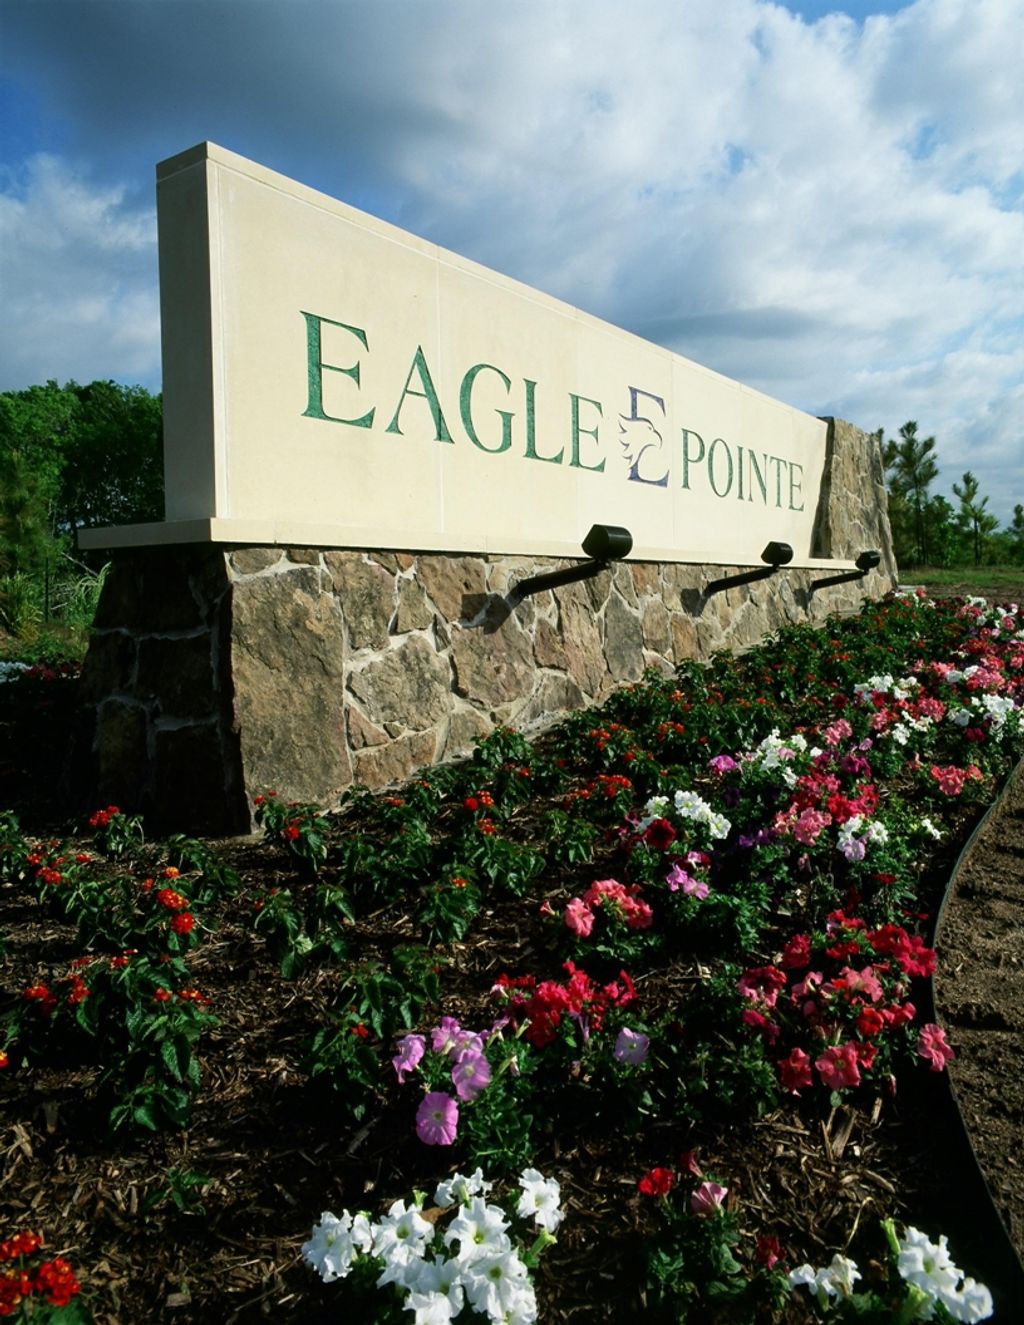 Eagle Pointe Recreation Complex